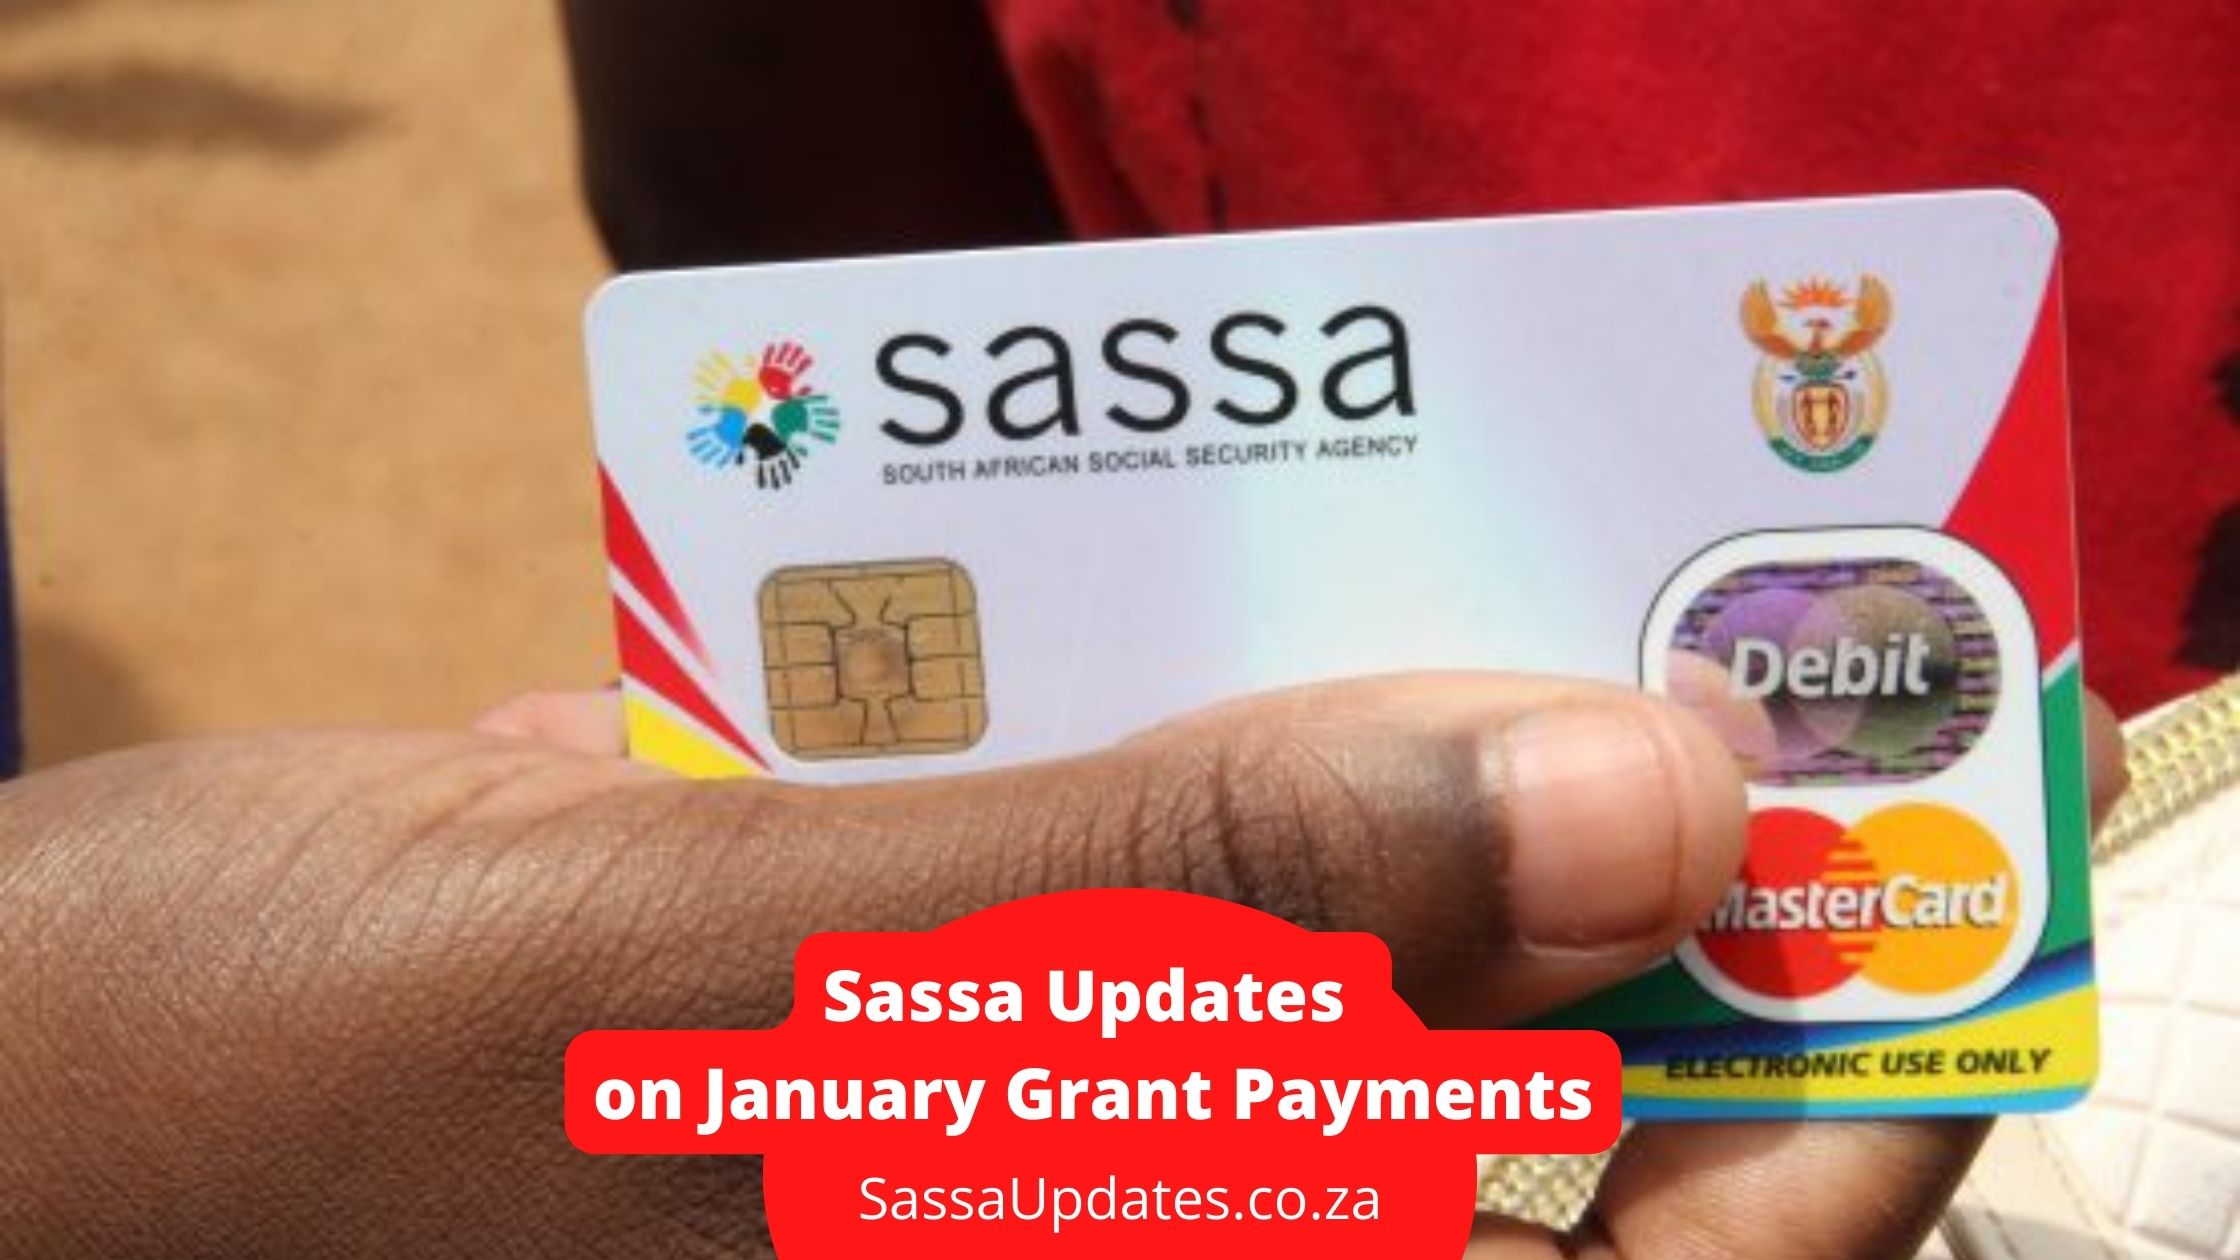 Sassa Updates on January Grant Payments